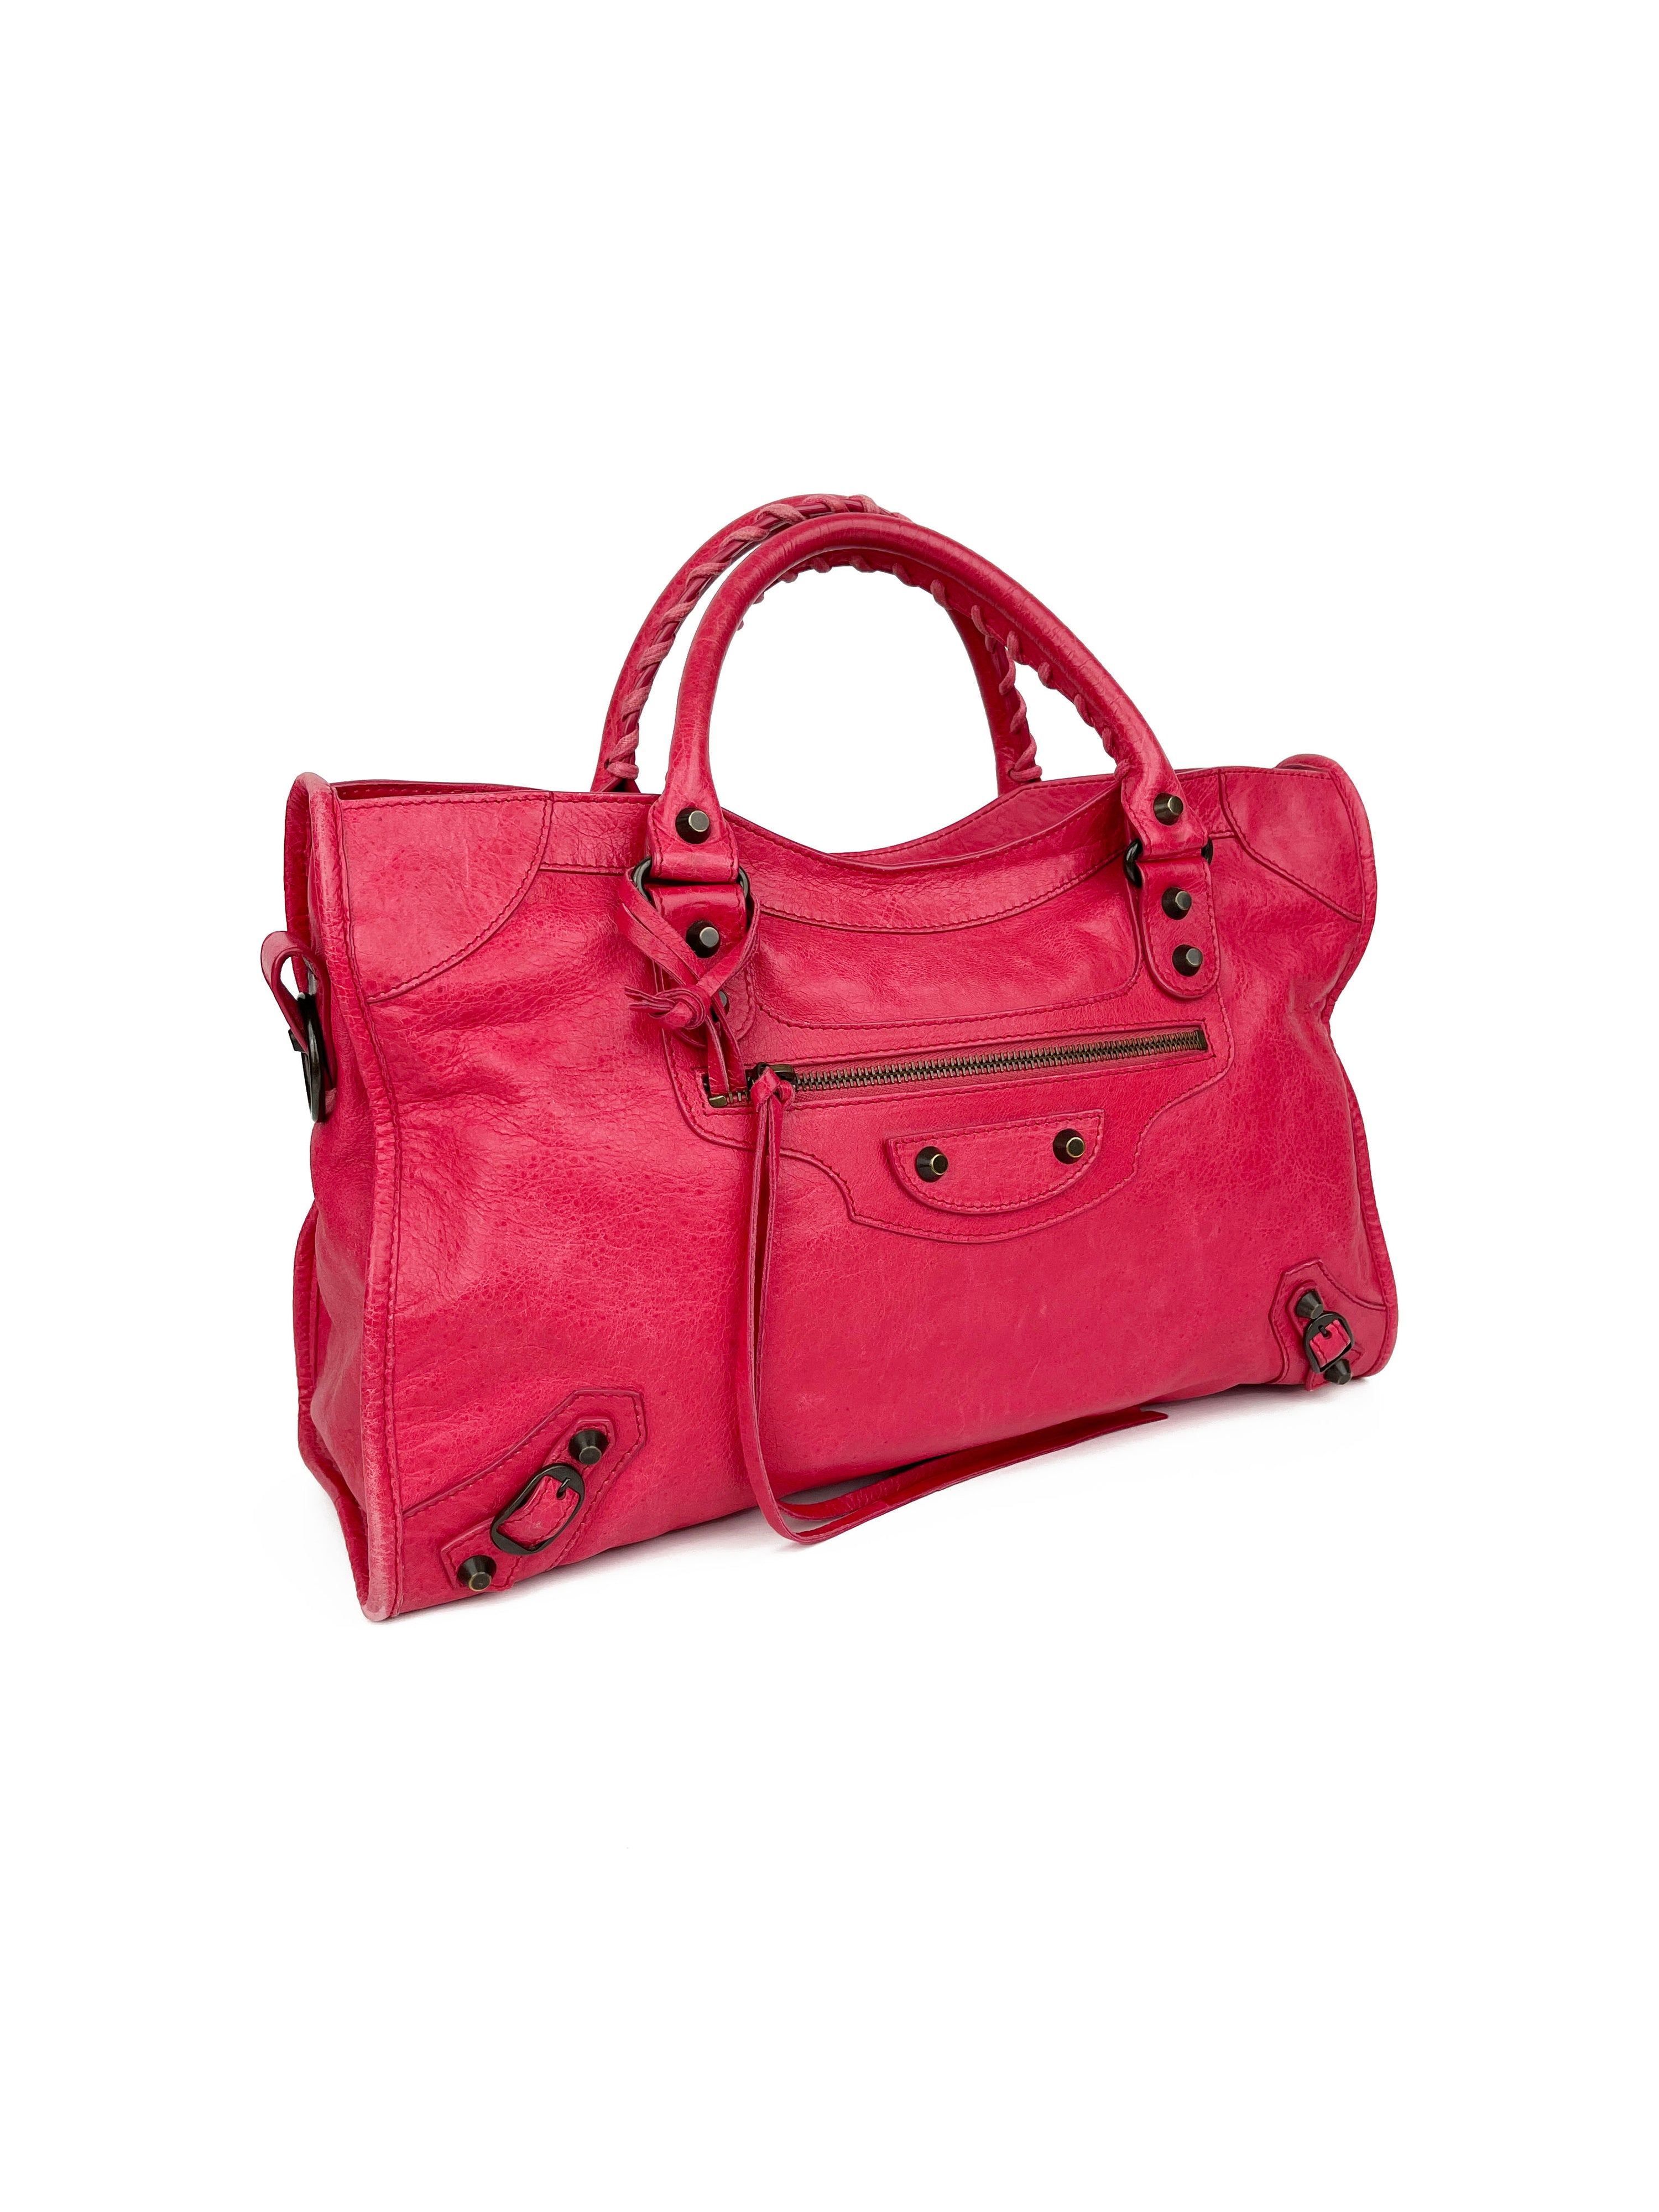 Balenciaga Medium Pink City Bag